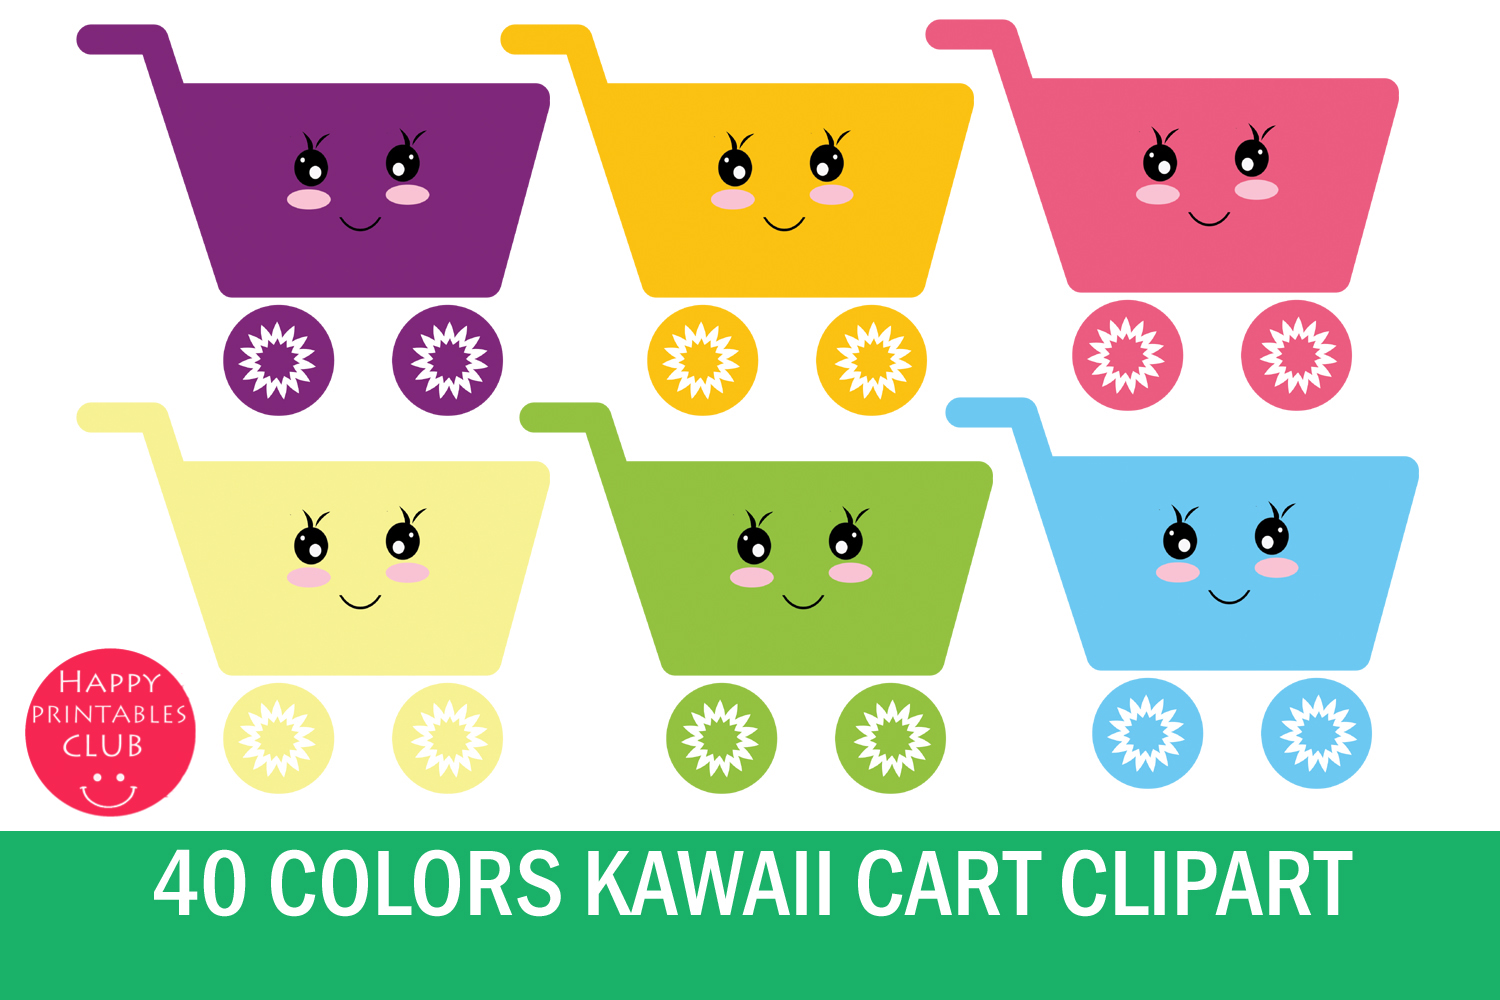 Kawaii cart clipartshopping.